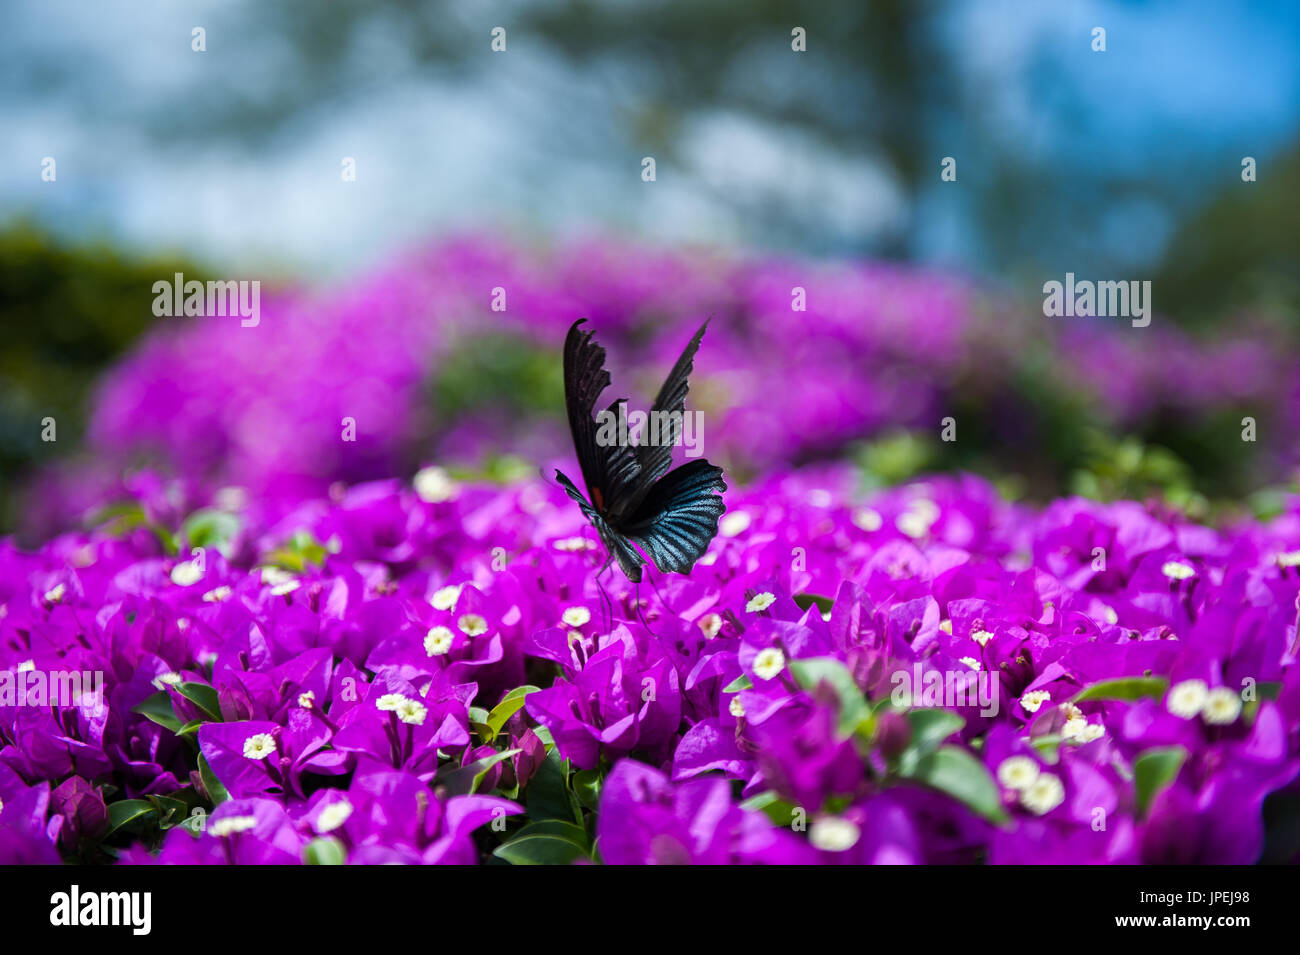 flying Butterfly taken in Thailand phu foi lom Stock Photo